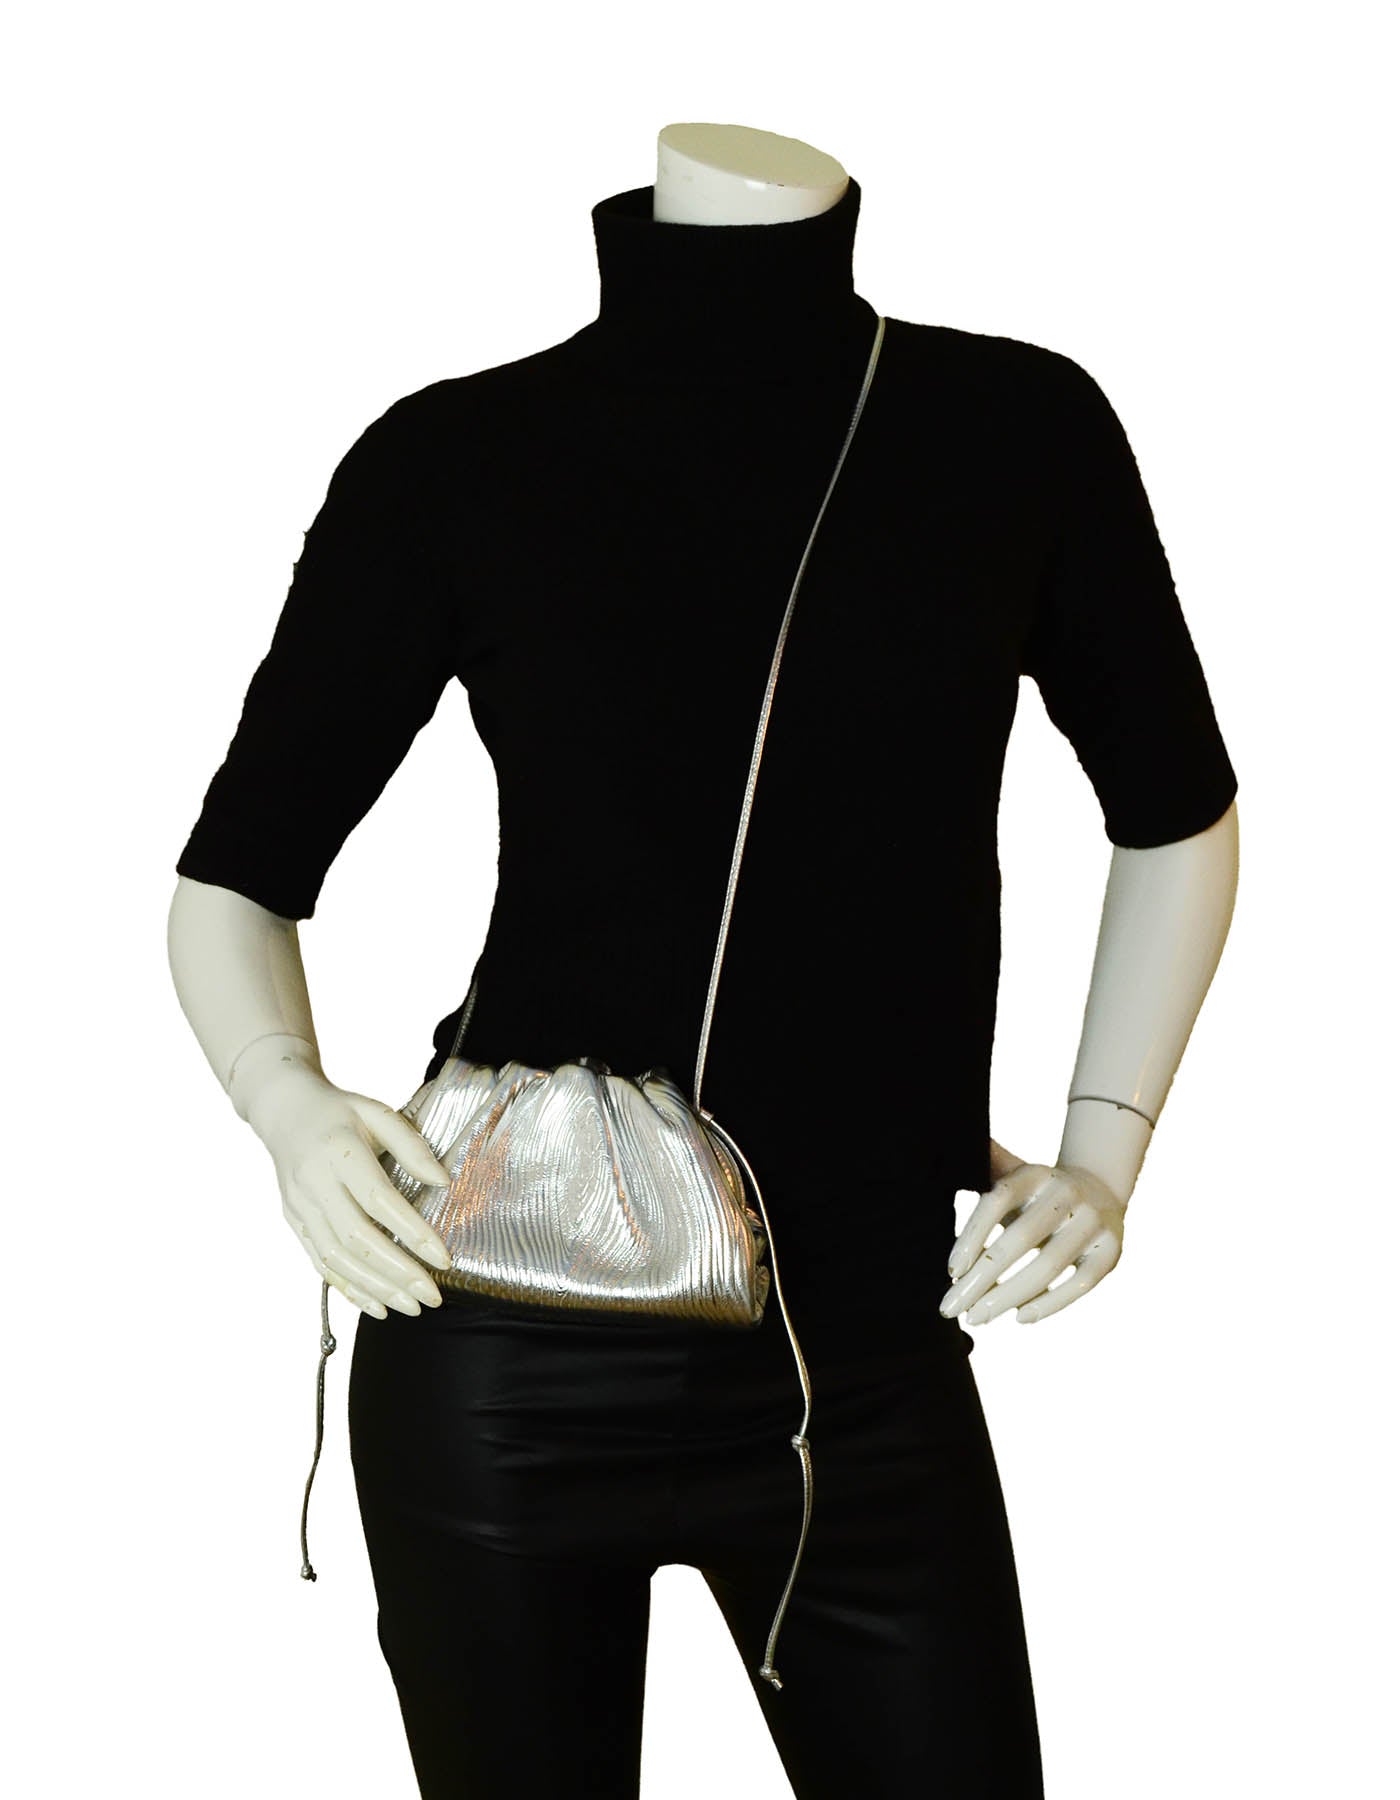 Bottega Veneta Leather Bark Metal Pouch Crossbody Bag in Silver & Gold, FWRD